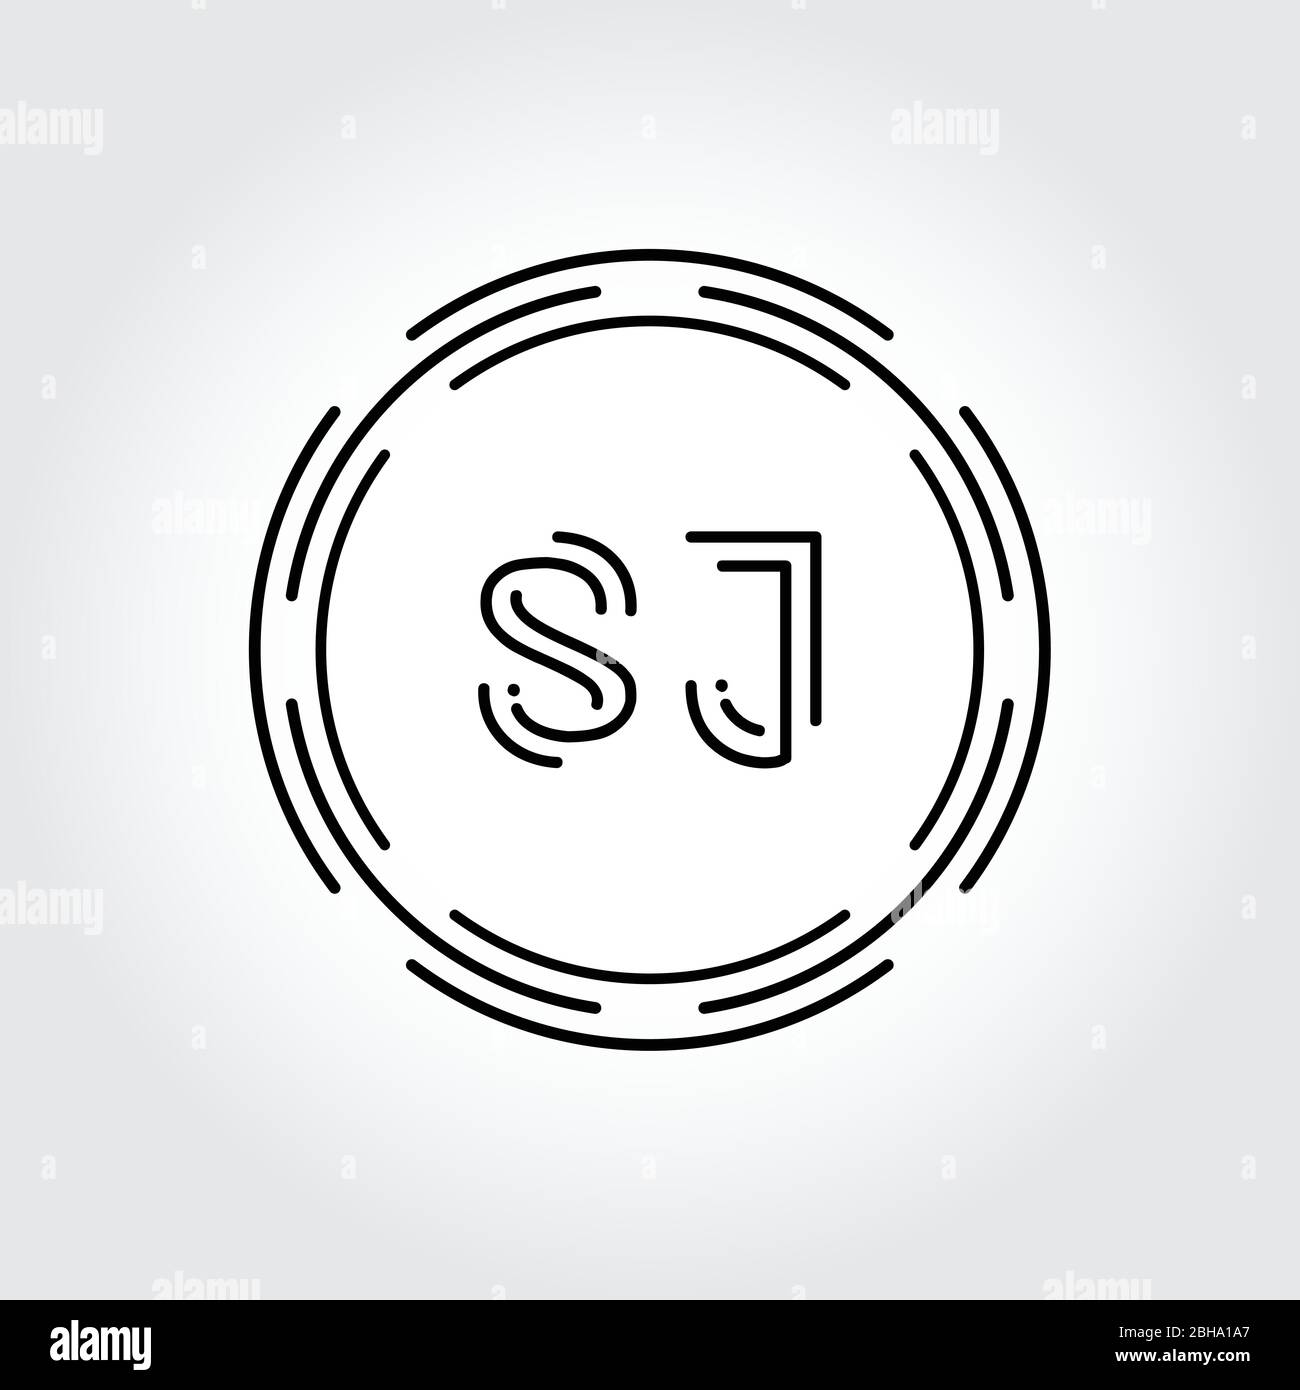 Initial SJ Logo Design Creative Typography Vector Template. Digital Abstract Letter SJ Logo Vector Illustration Stock Vector